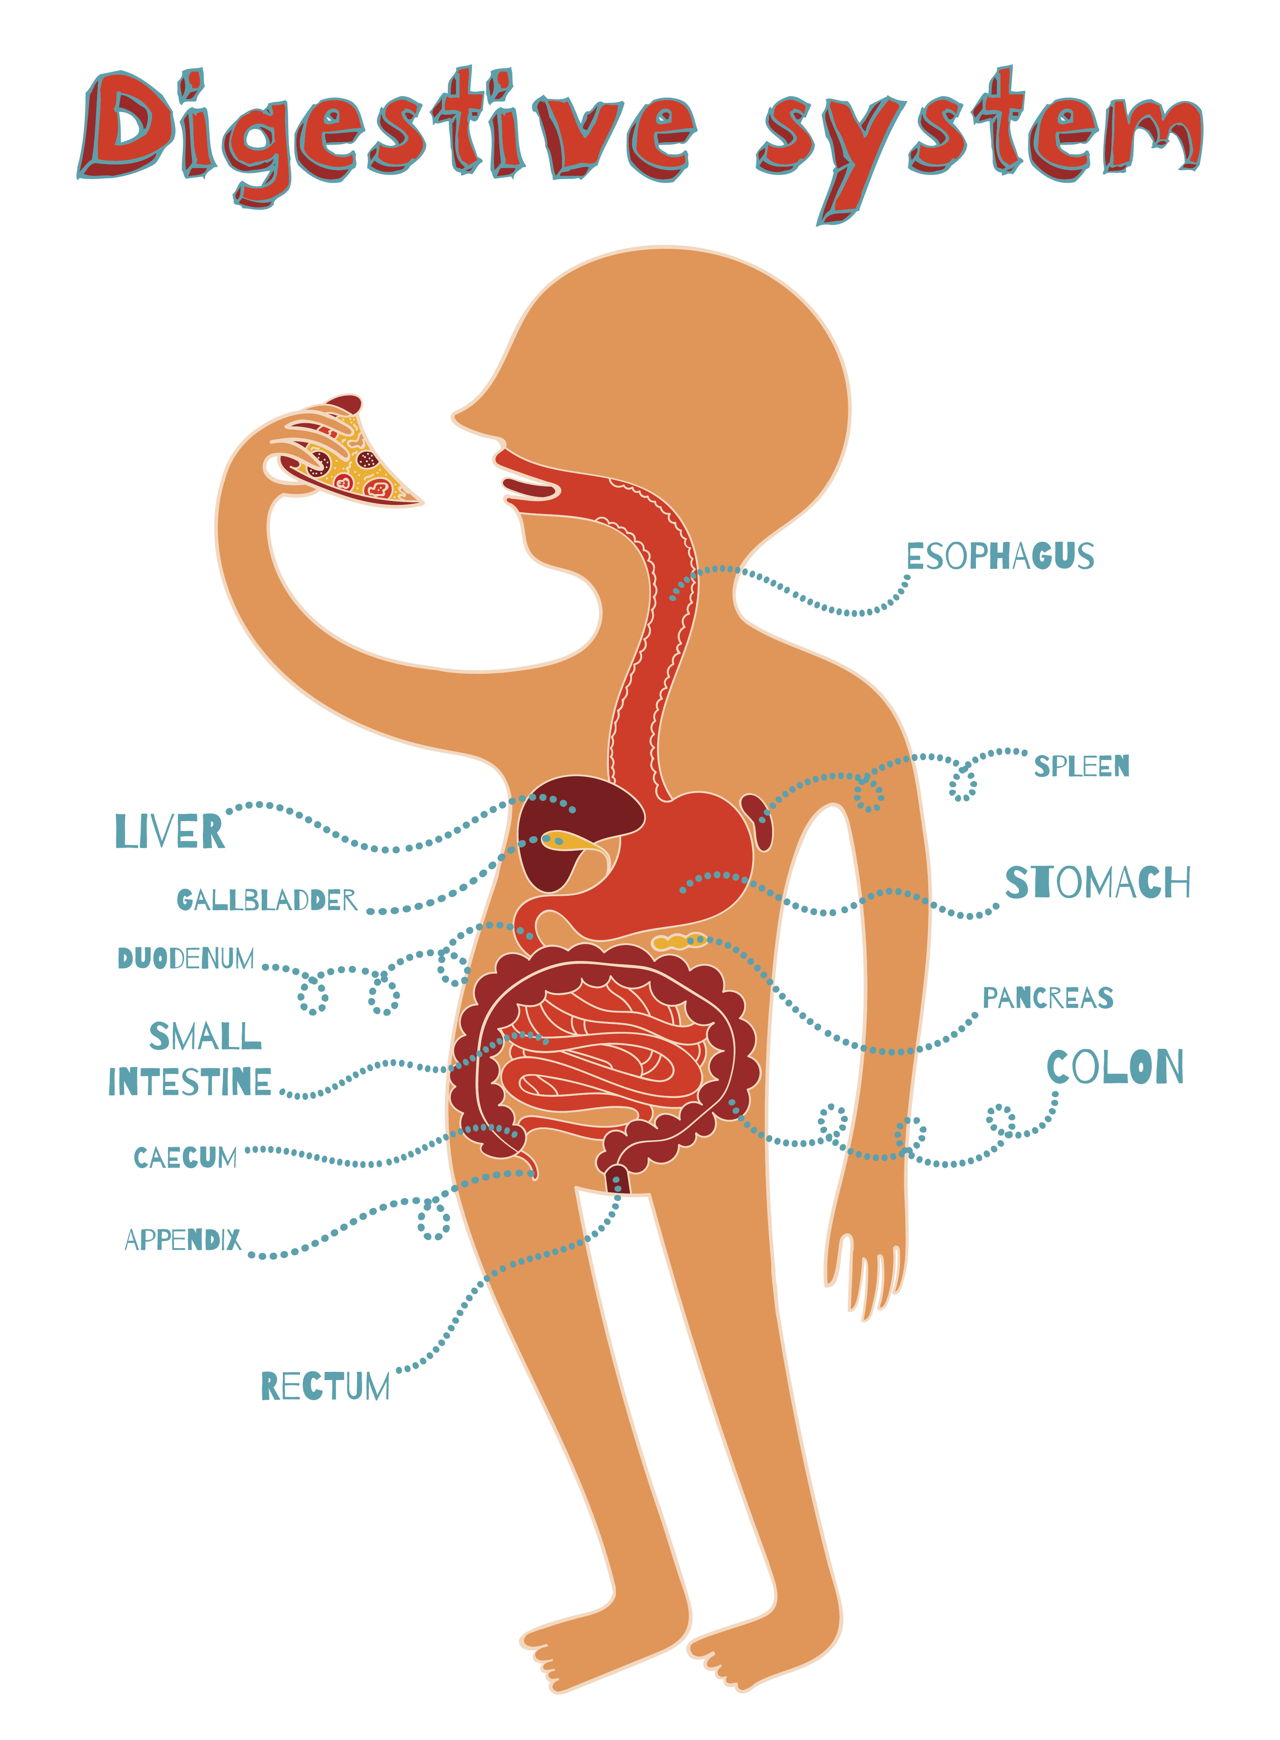 [DIAGRAM] Printable Digestive System Diagram For Kids - MYDIAGRAM.ONLINE